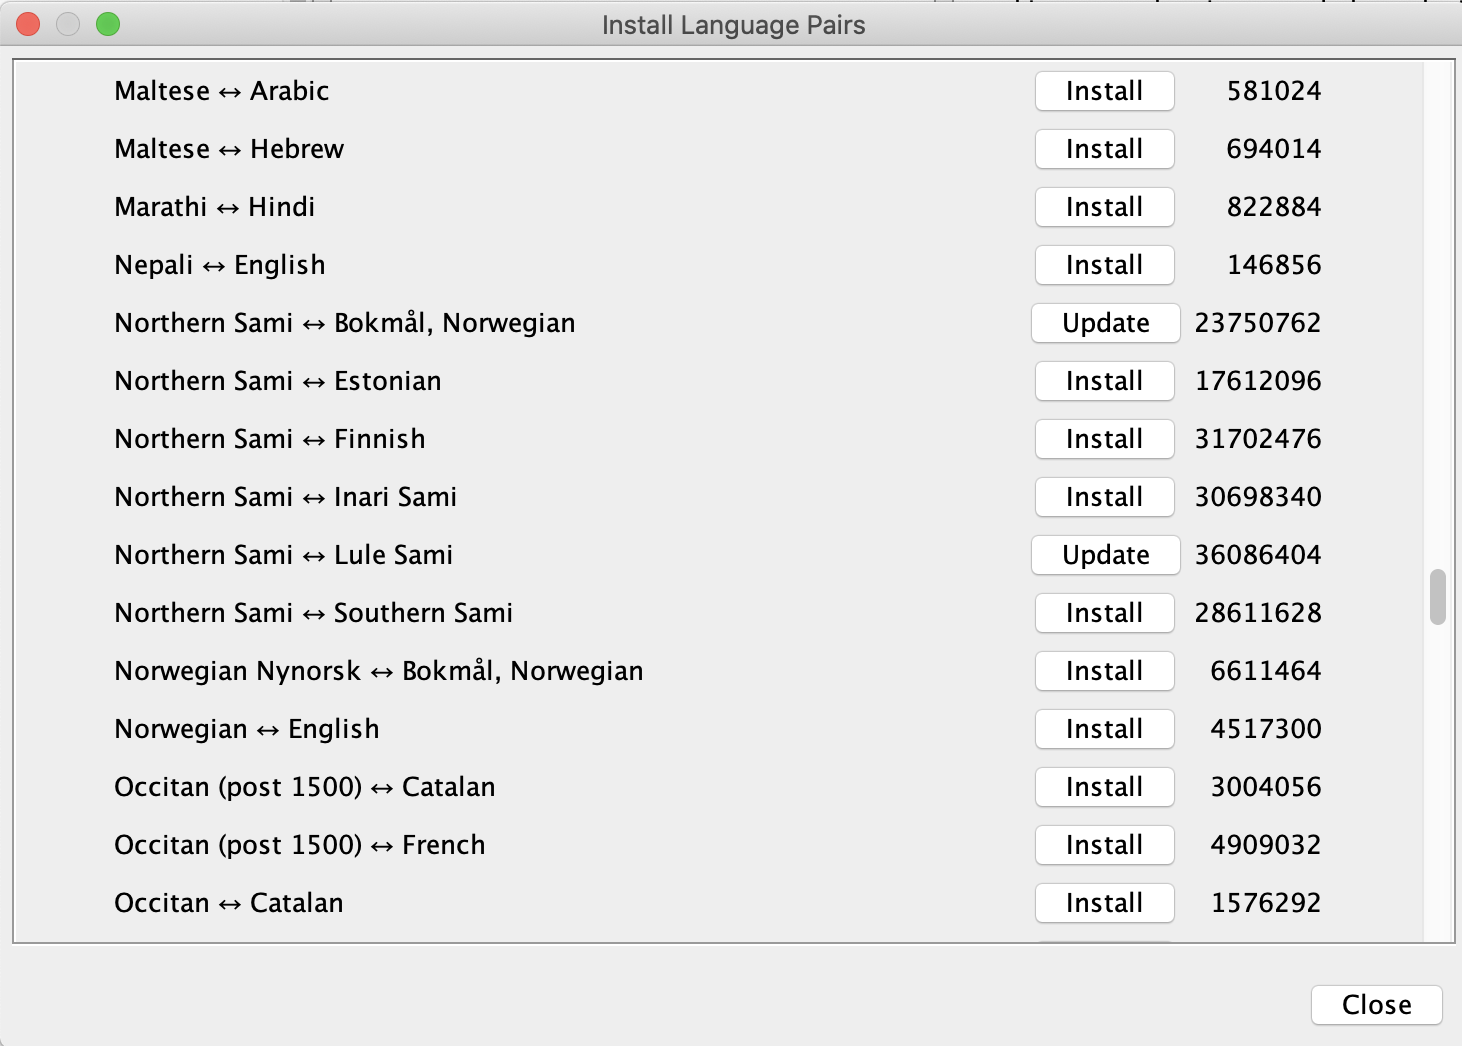 Install Language Pairs window